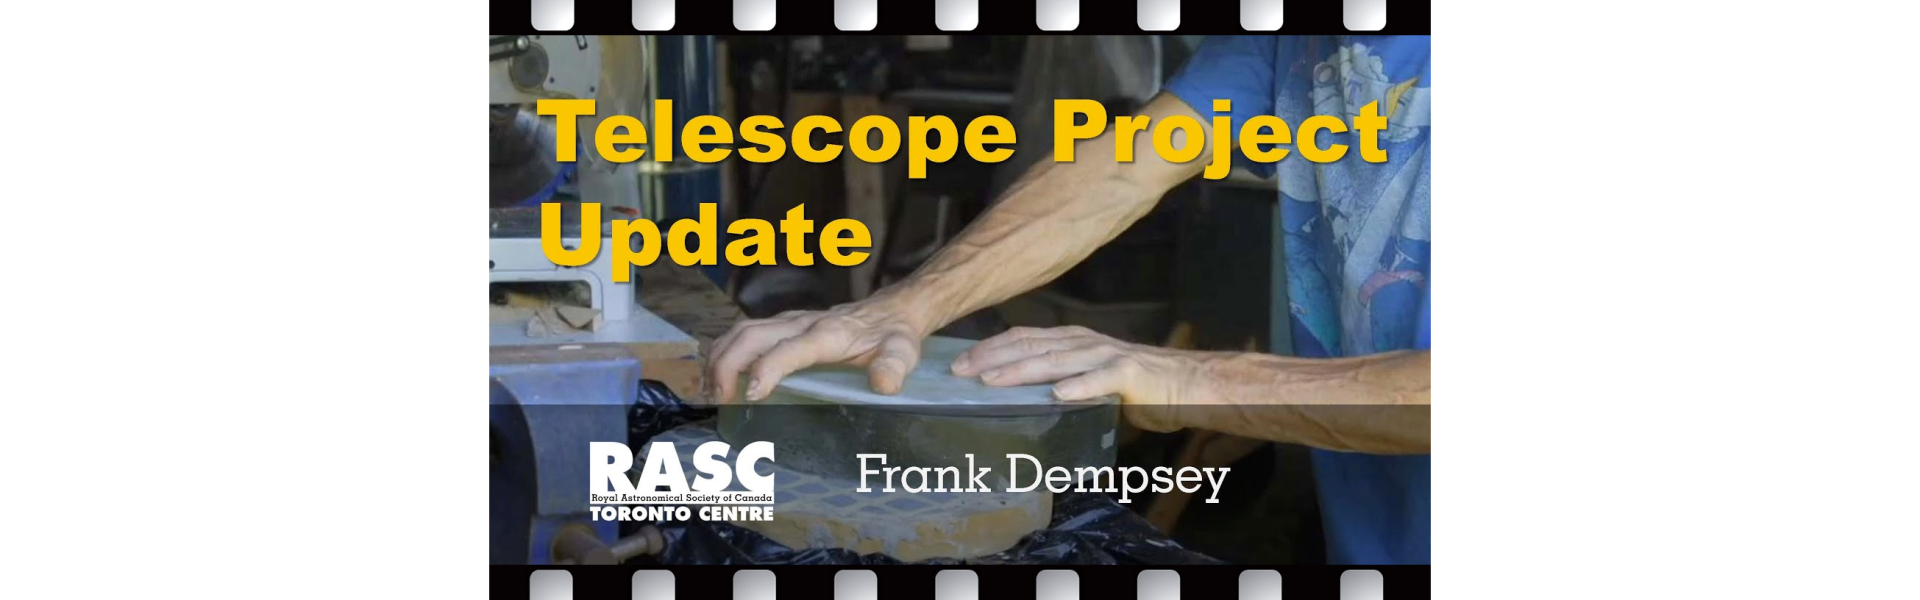 Telescope Project Update